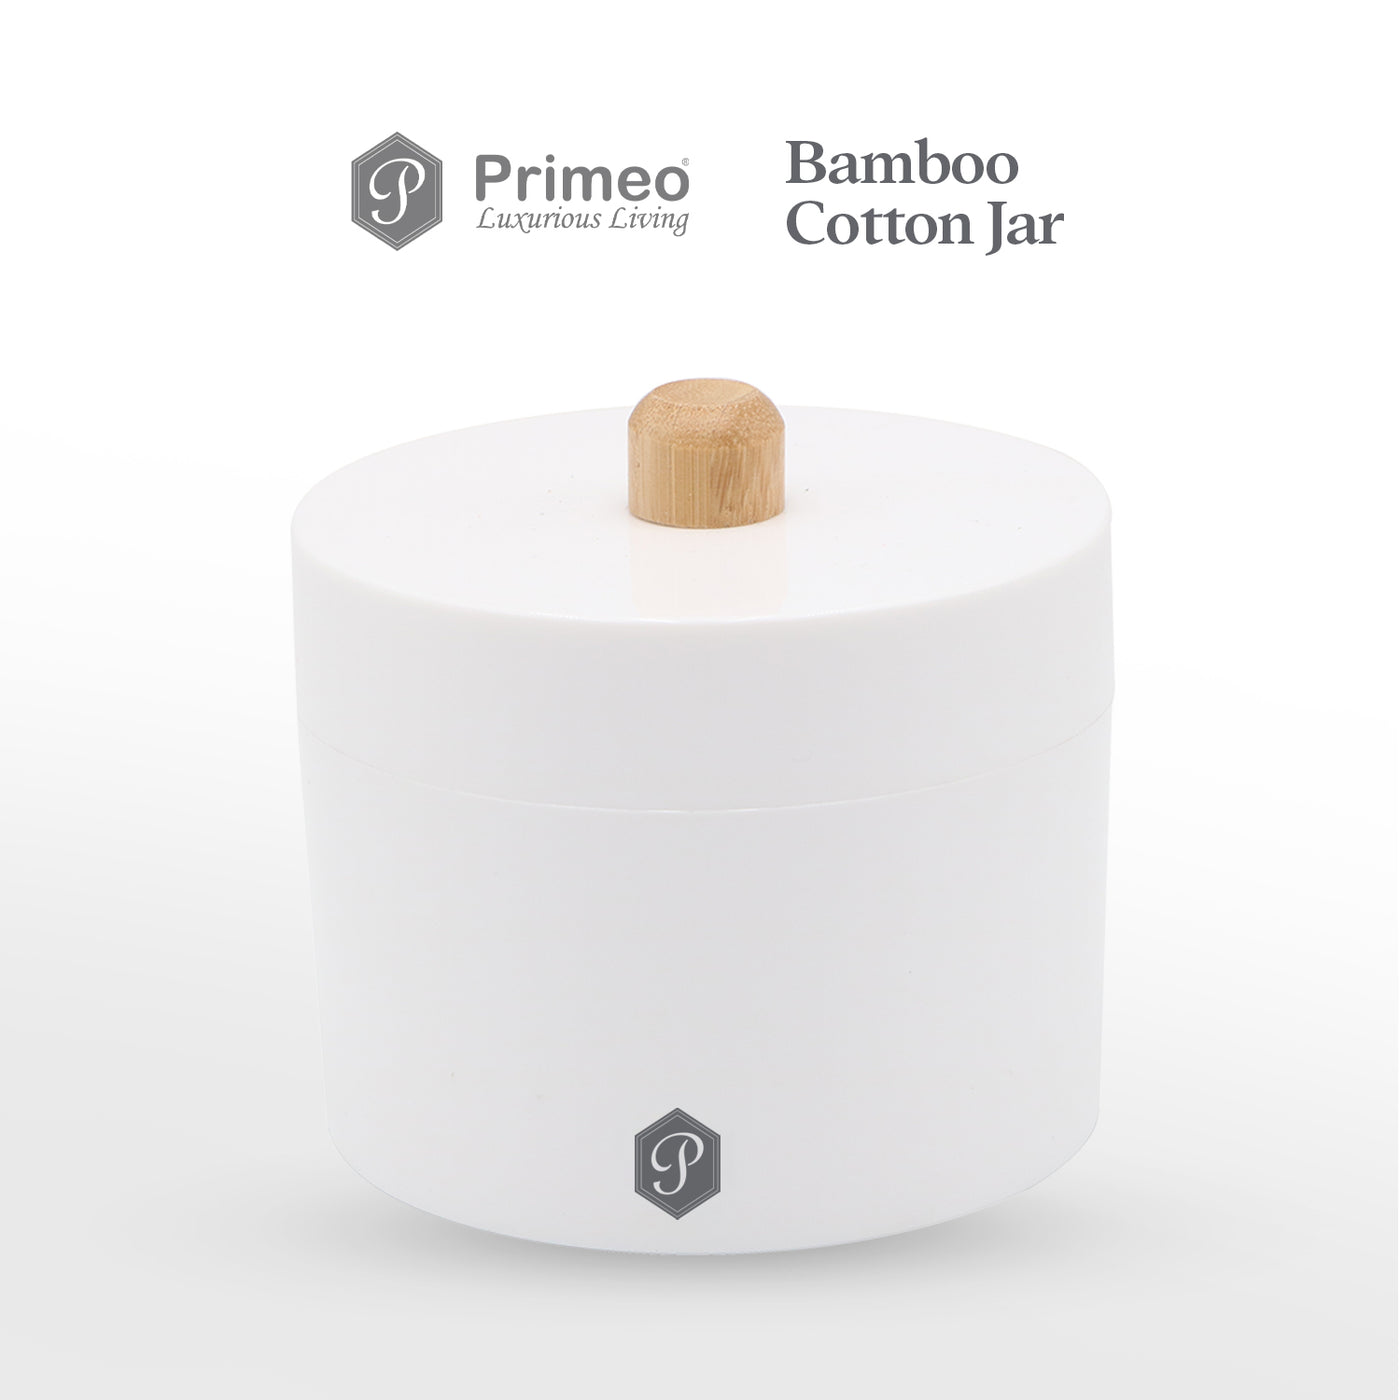 PRIMEO Premium Bamboo Cotton Jar 10.5cm X 10.5cm X 10cm Modern Italian Design Amazing Gift Idea For Any Occasion!